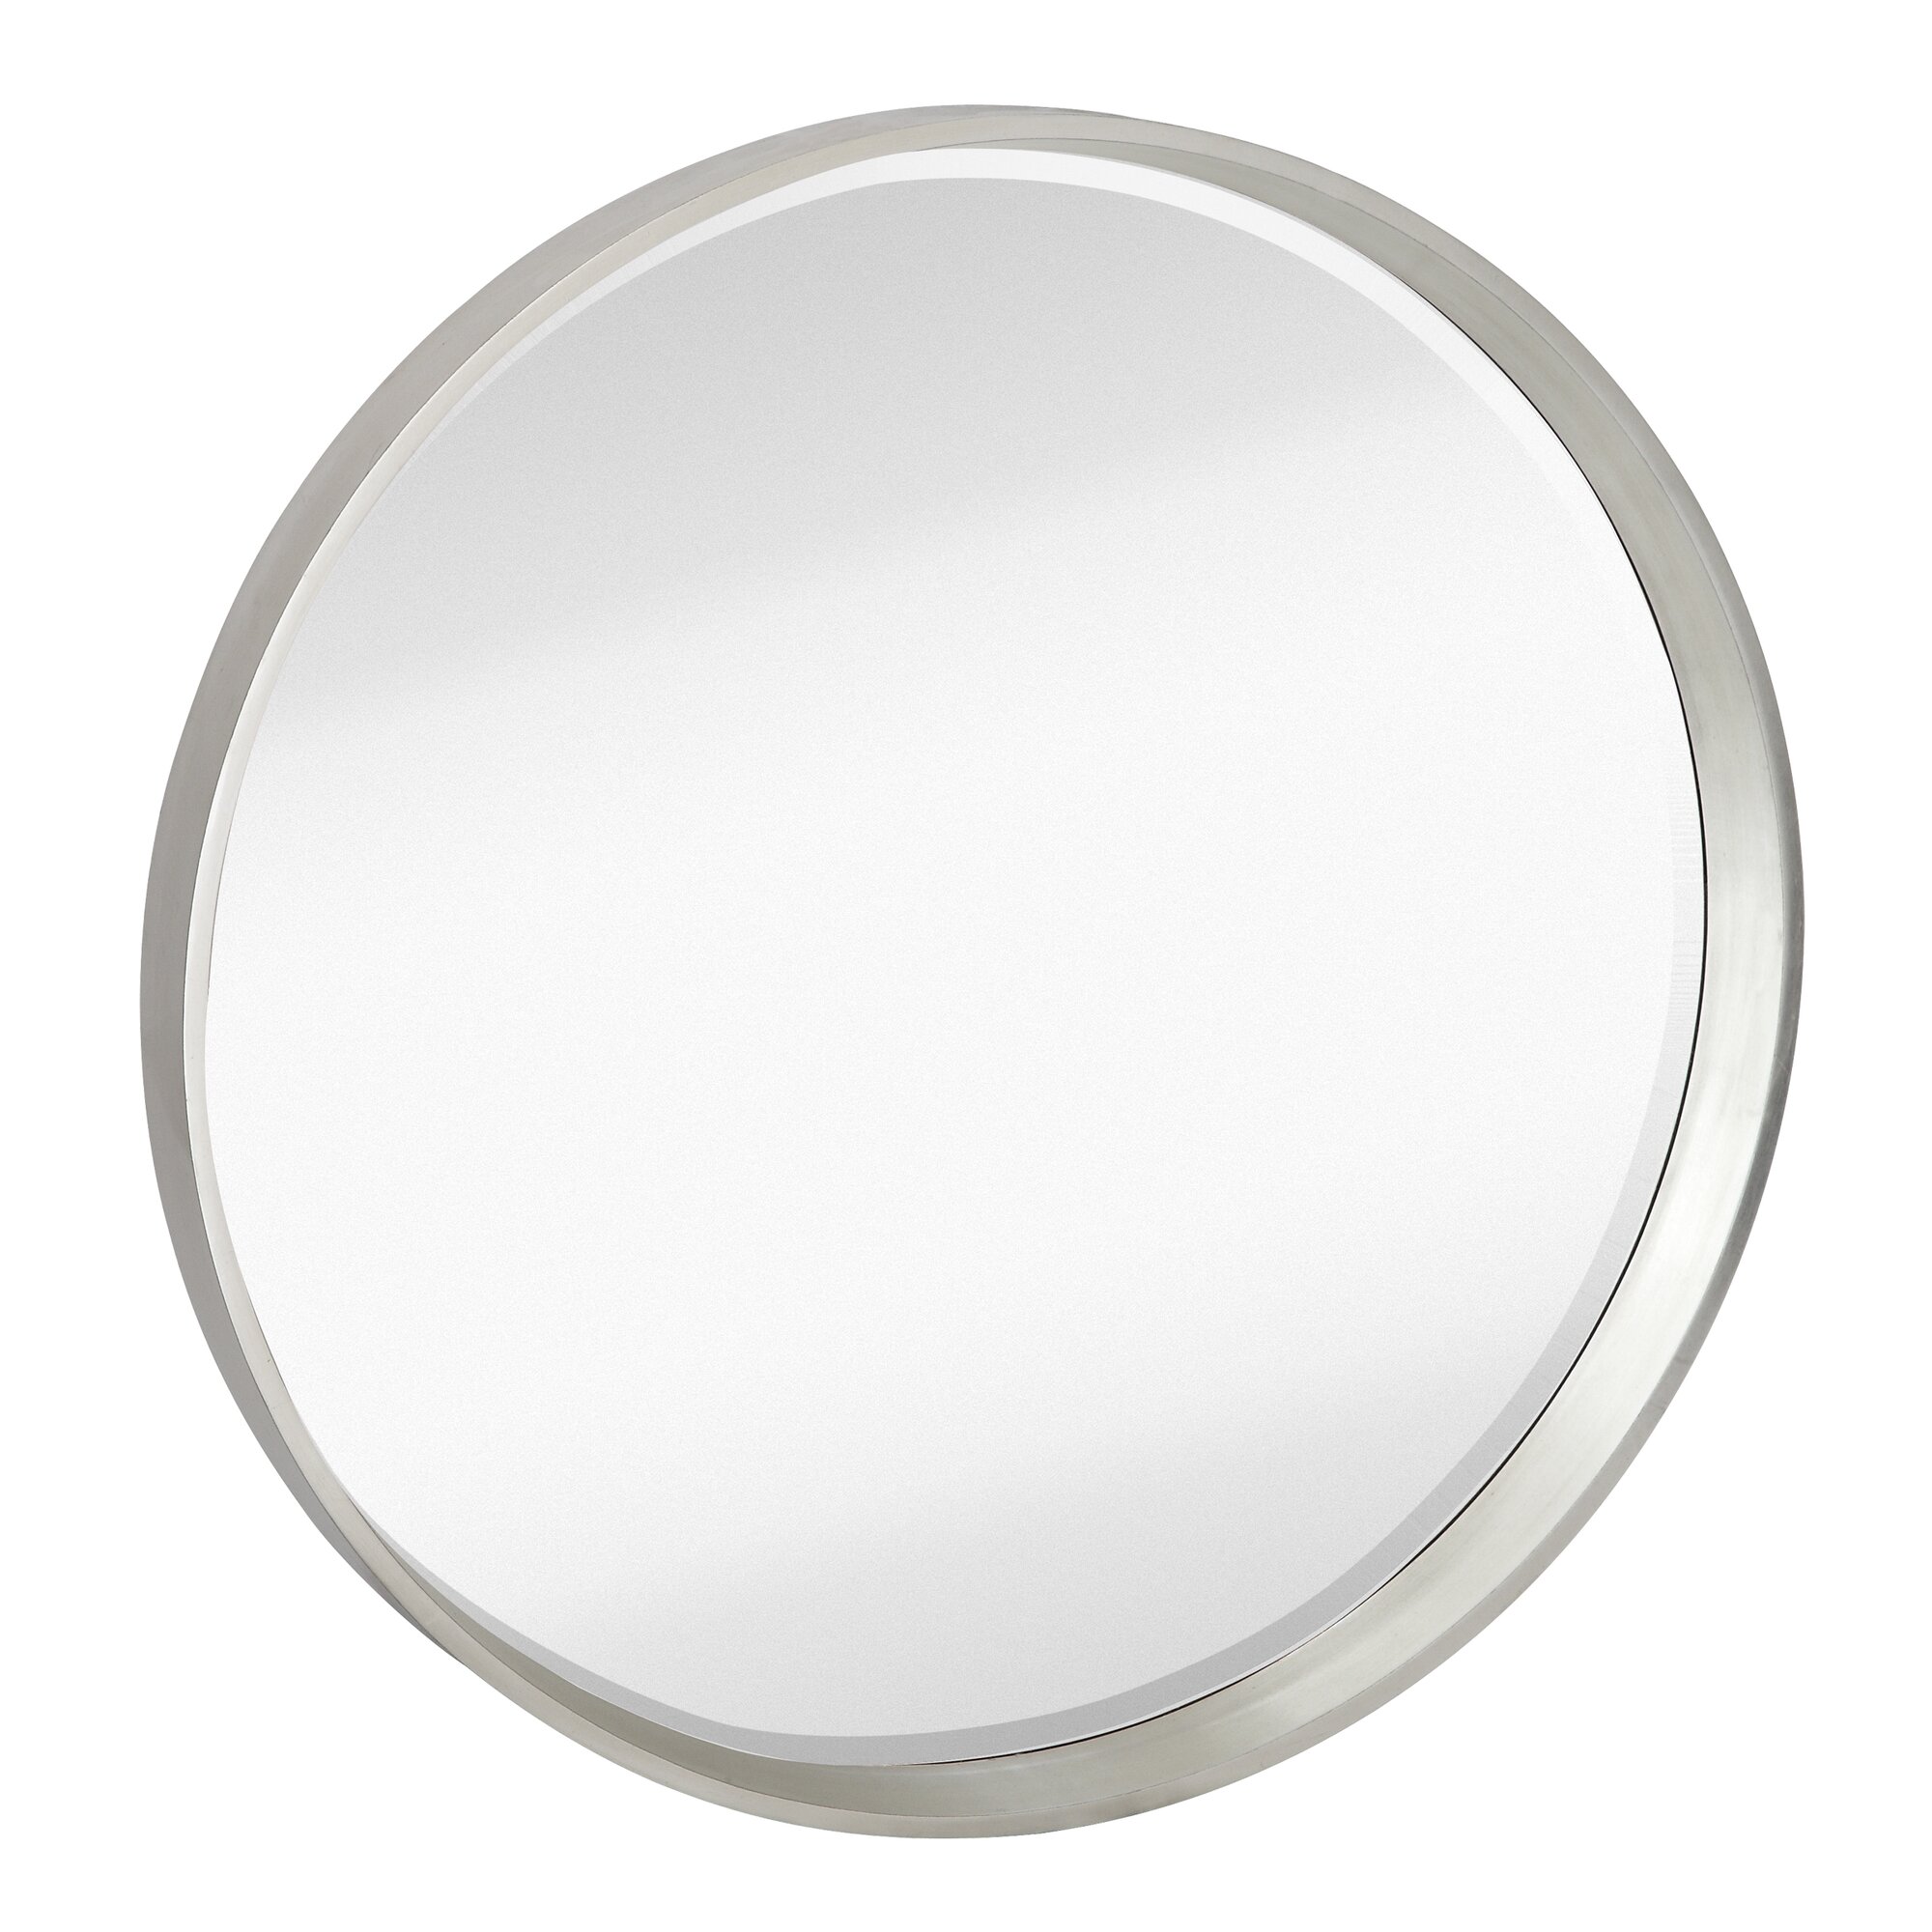 Majestic Mirror Simple Silver Frame Modern Circular Beveled Glass Wall ...